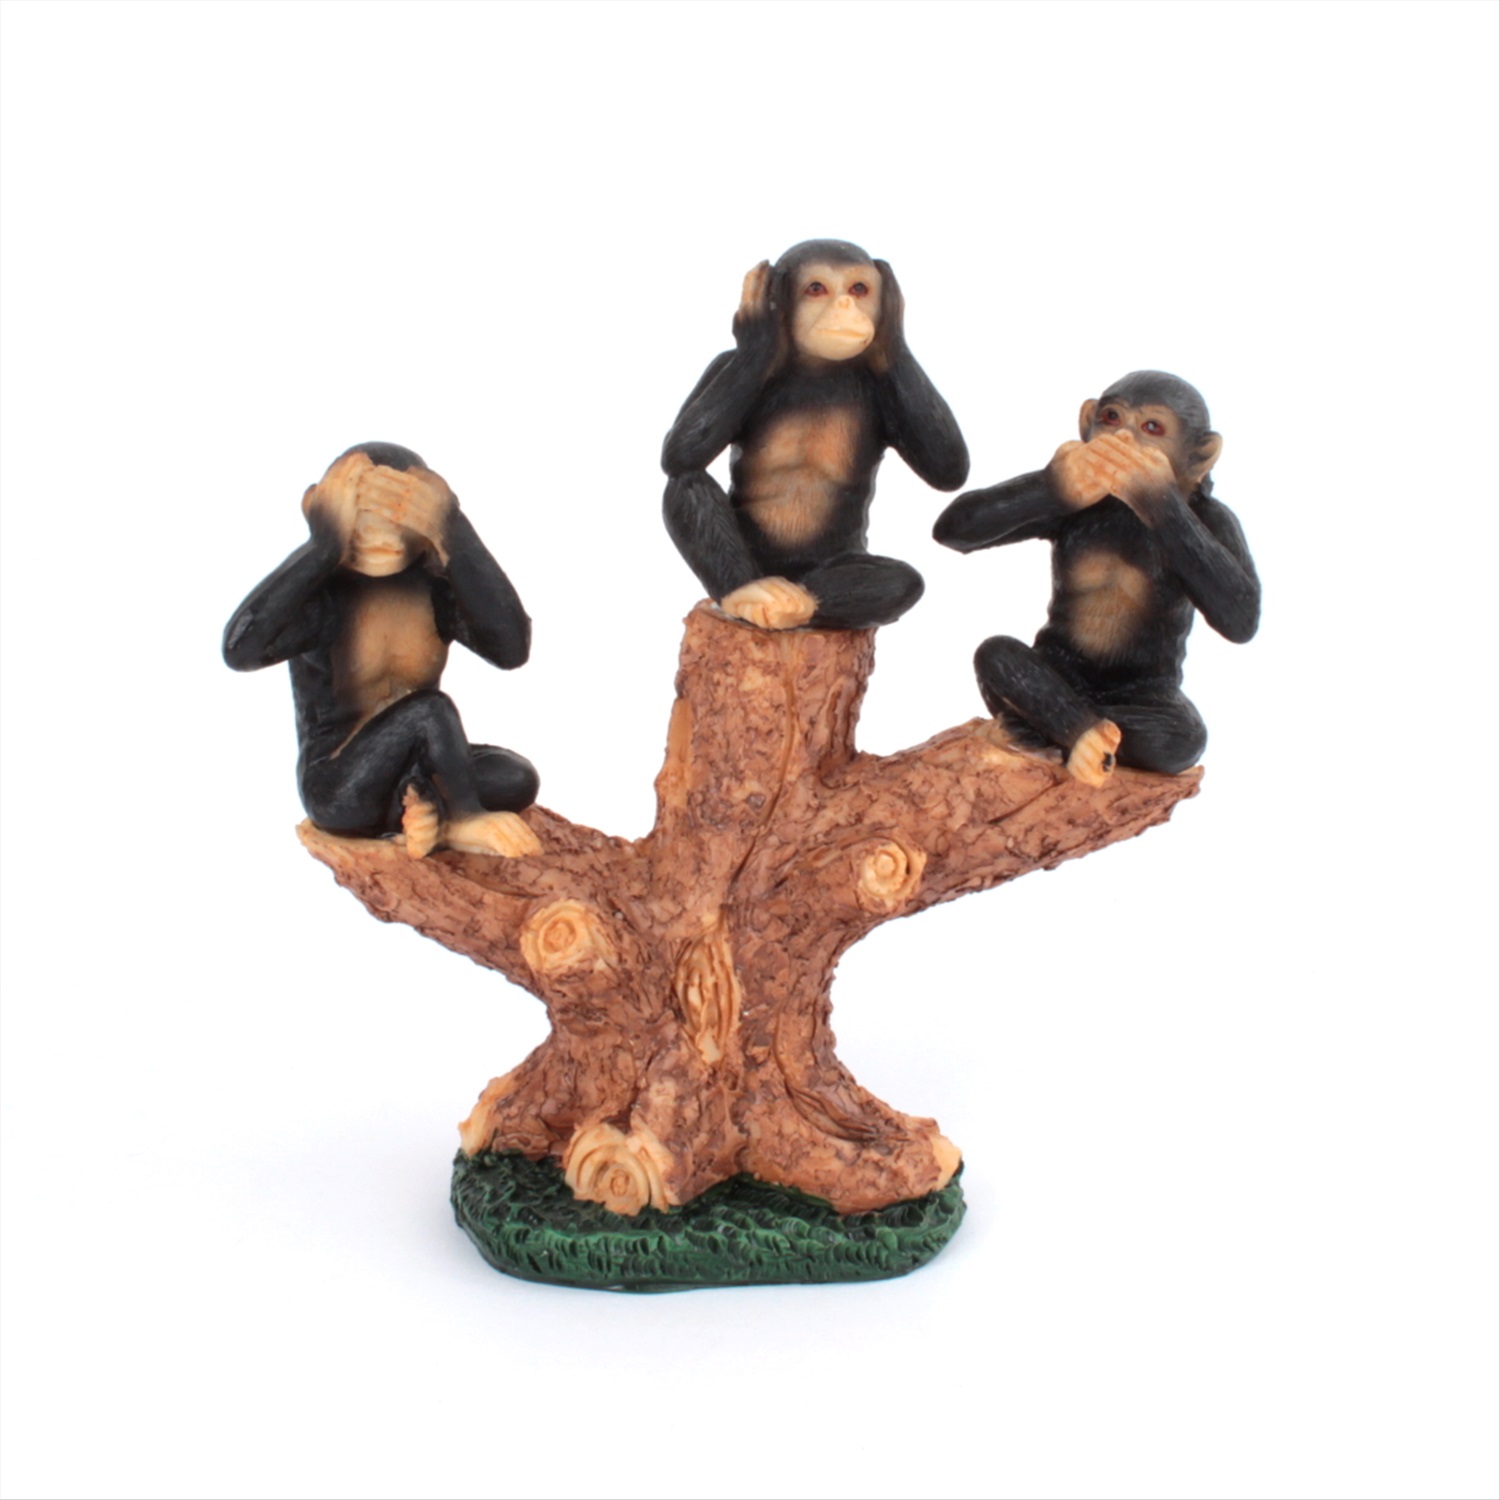 Три фигурки. Статуэтка три обезьяны. Статуэтка 3 обезьяны. Фигурка из трех обезьян. Статуэтки 3 мартышки.